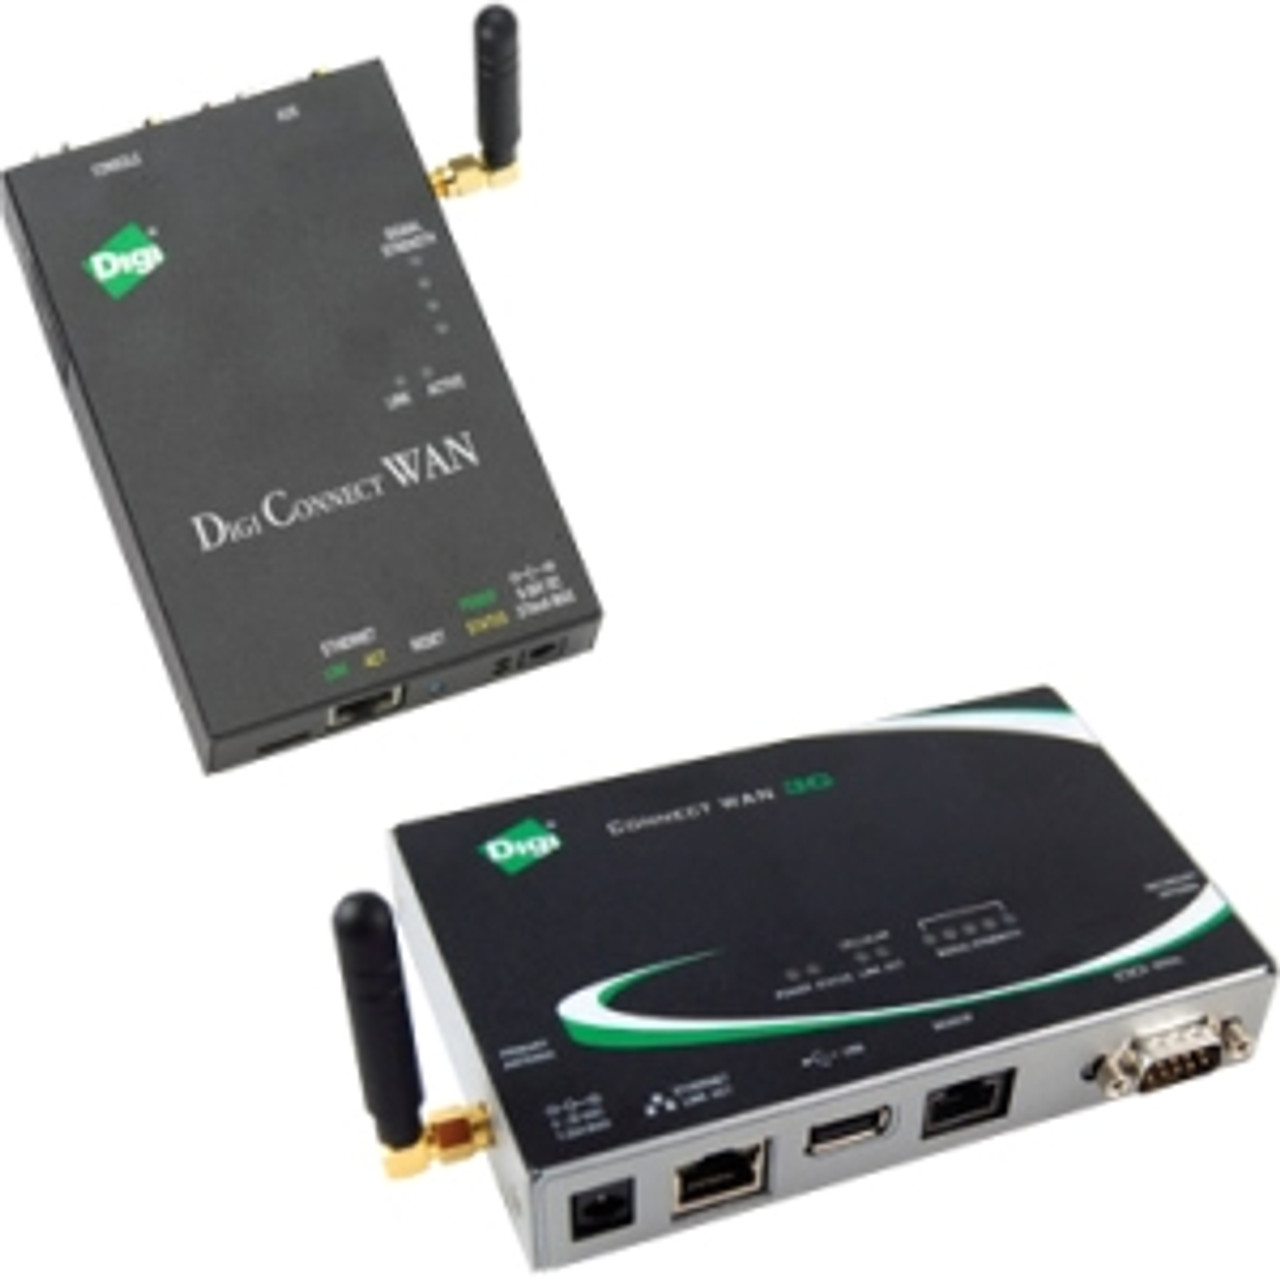 DC-WAN-P501-A Digi Digi Connect WAN 3G IA Wireless Router 2 x Antenna 2 x Network Port USB Rail-mountable (Refurbished)